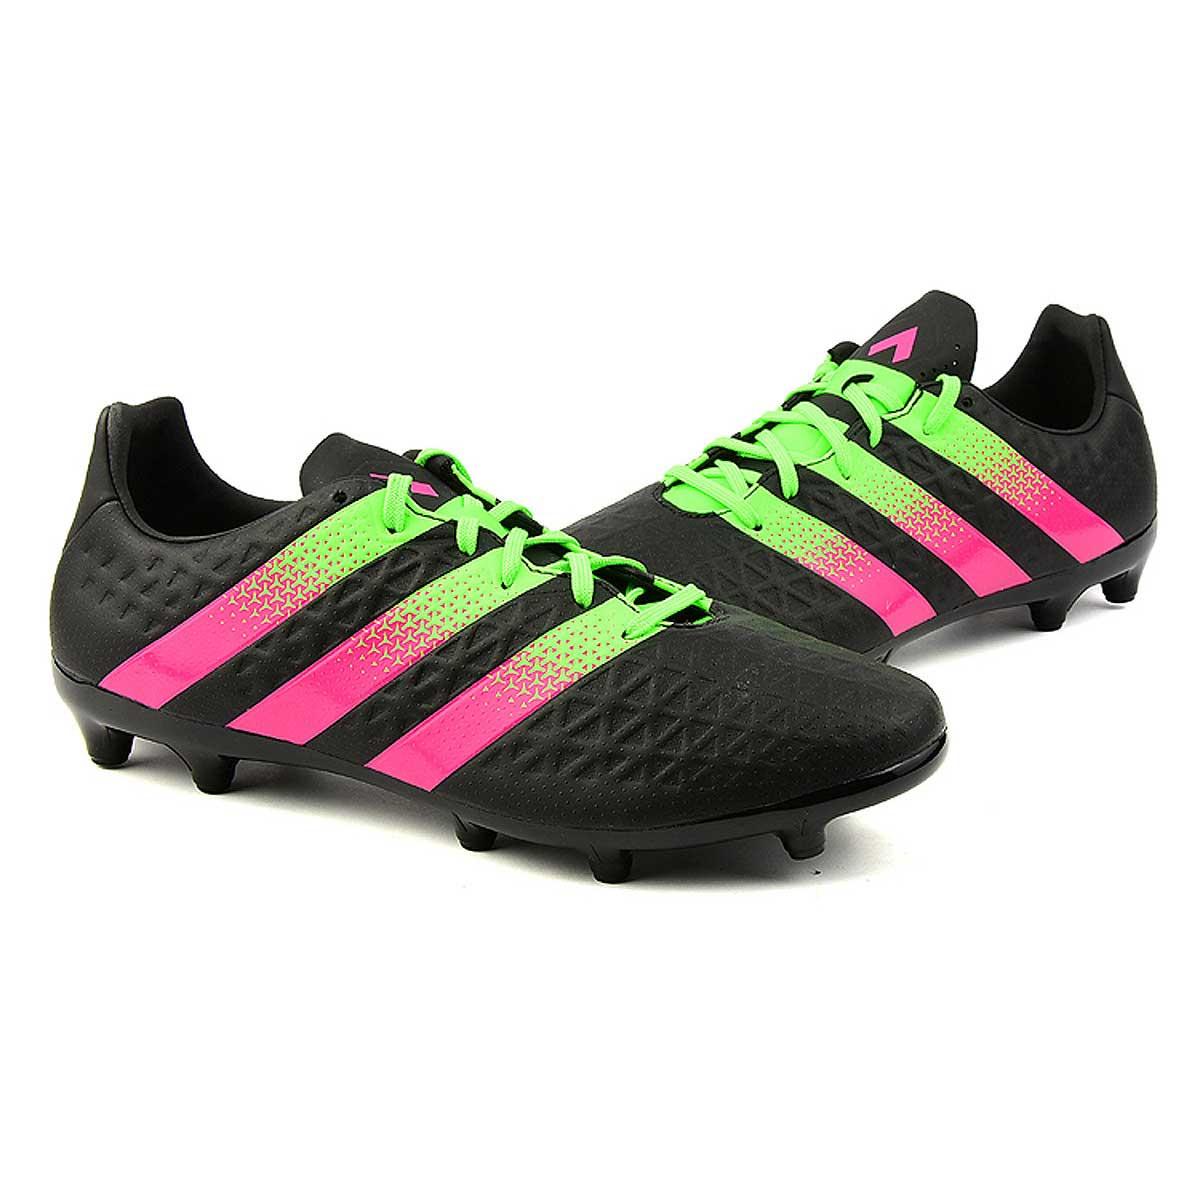 Adidas ACE 16.3 FG/AG Football Shoes (Black/Green) Online